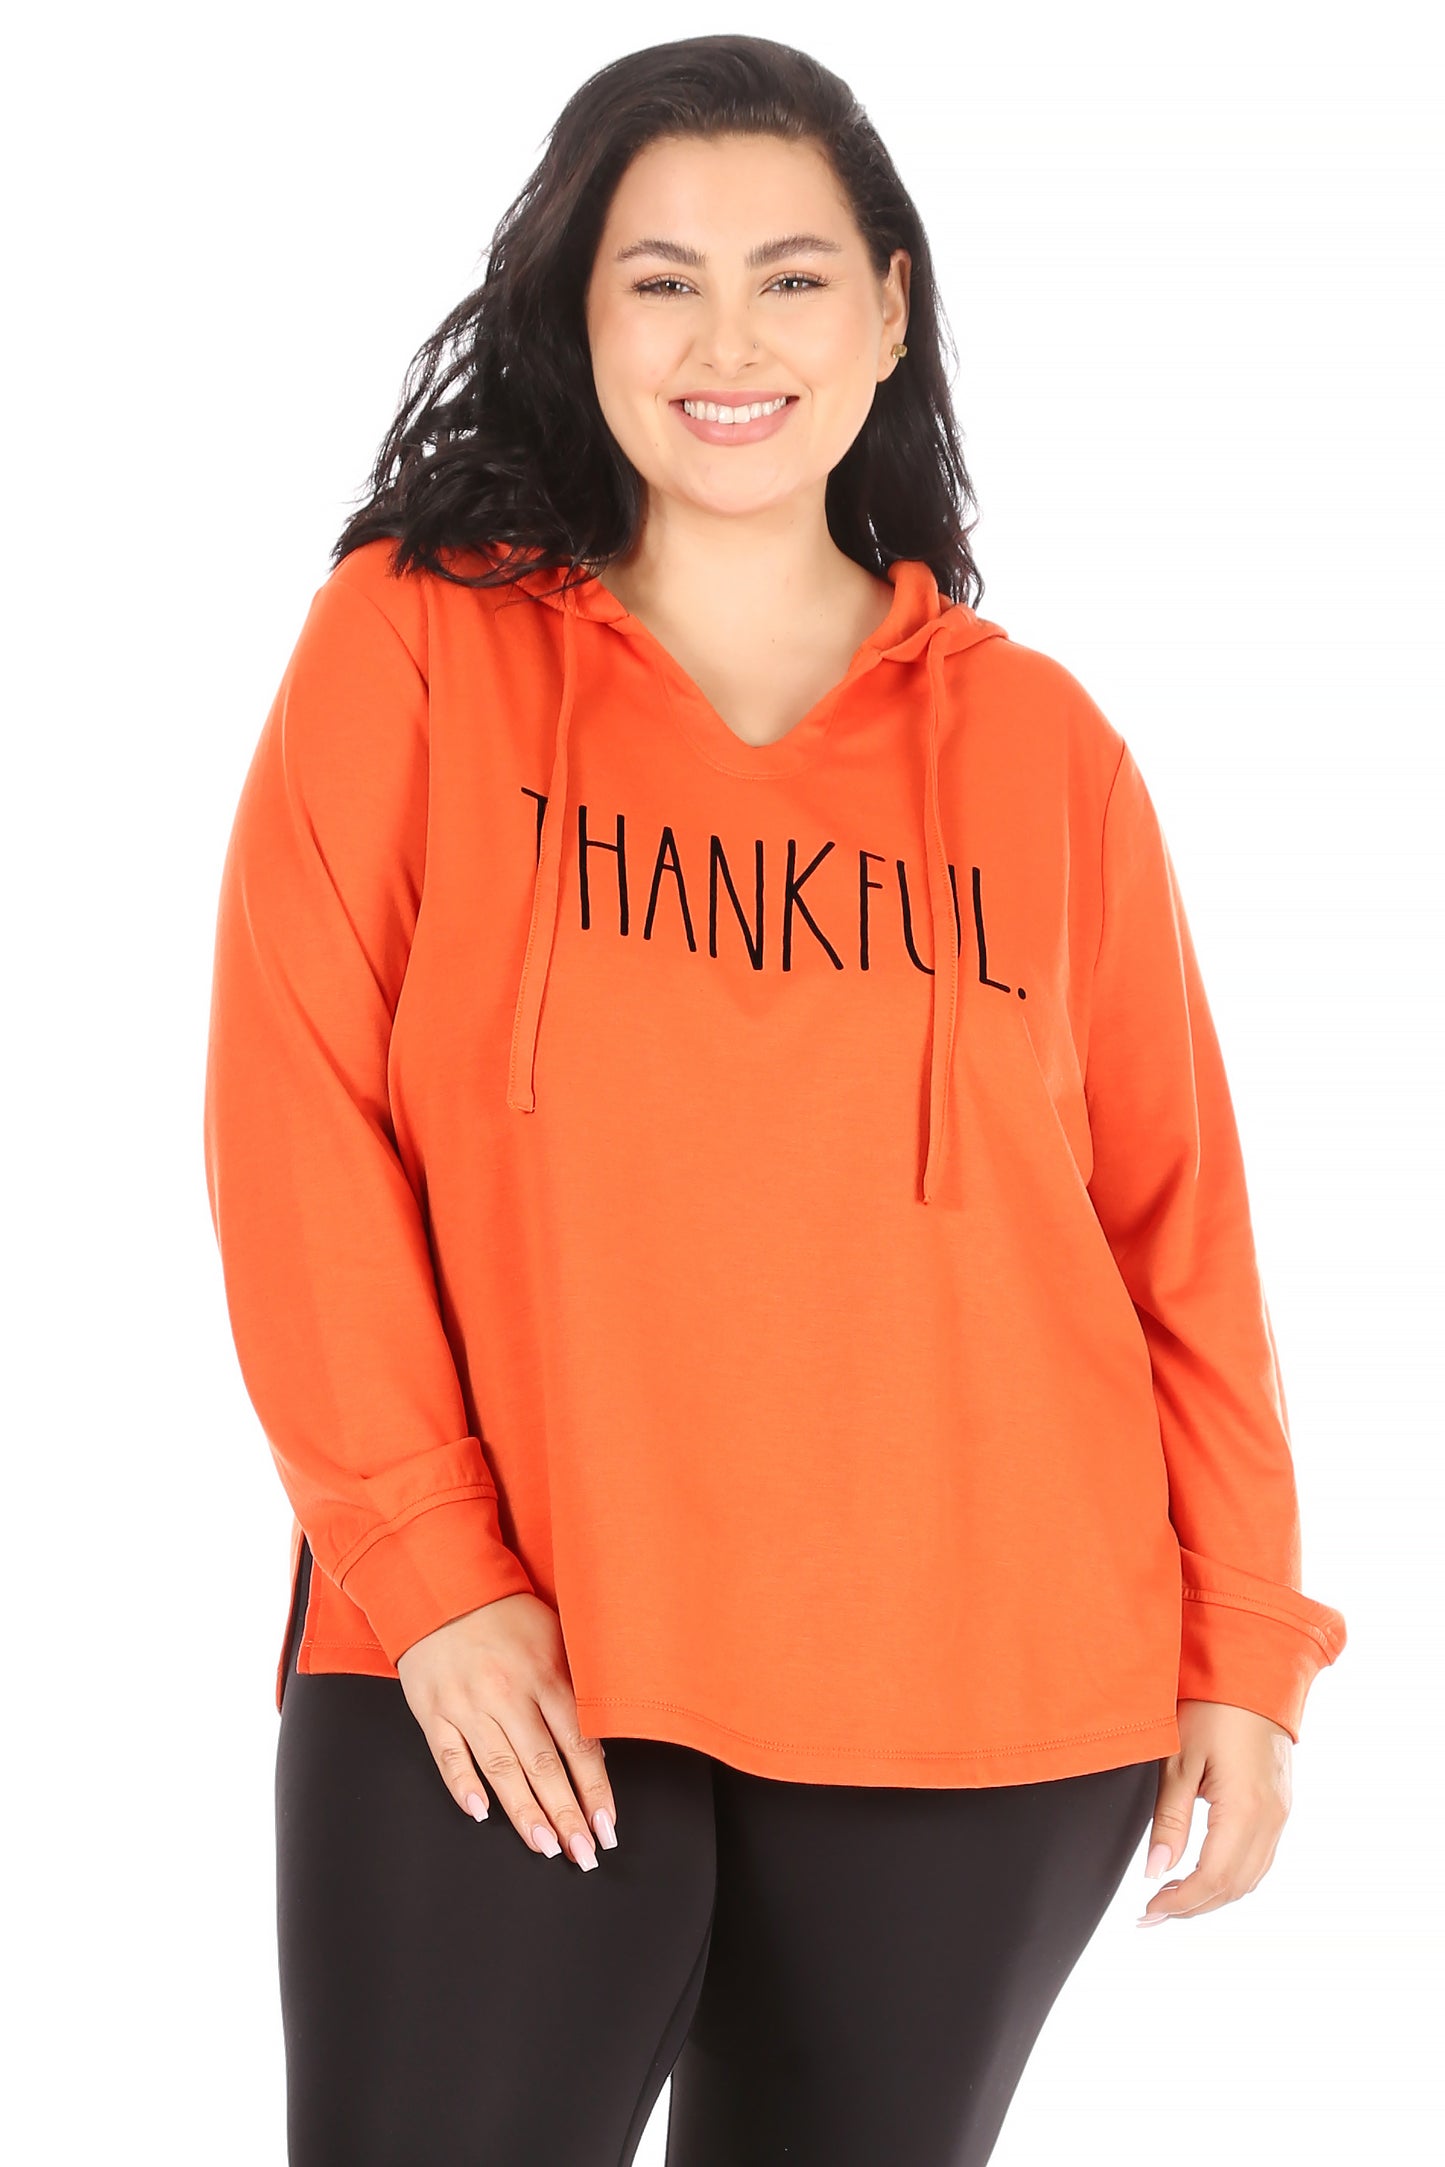 Women's "THANKFUL" Plus Size Pullover Lounge Hoodie - Rae Dunn Wear